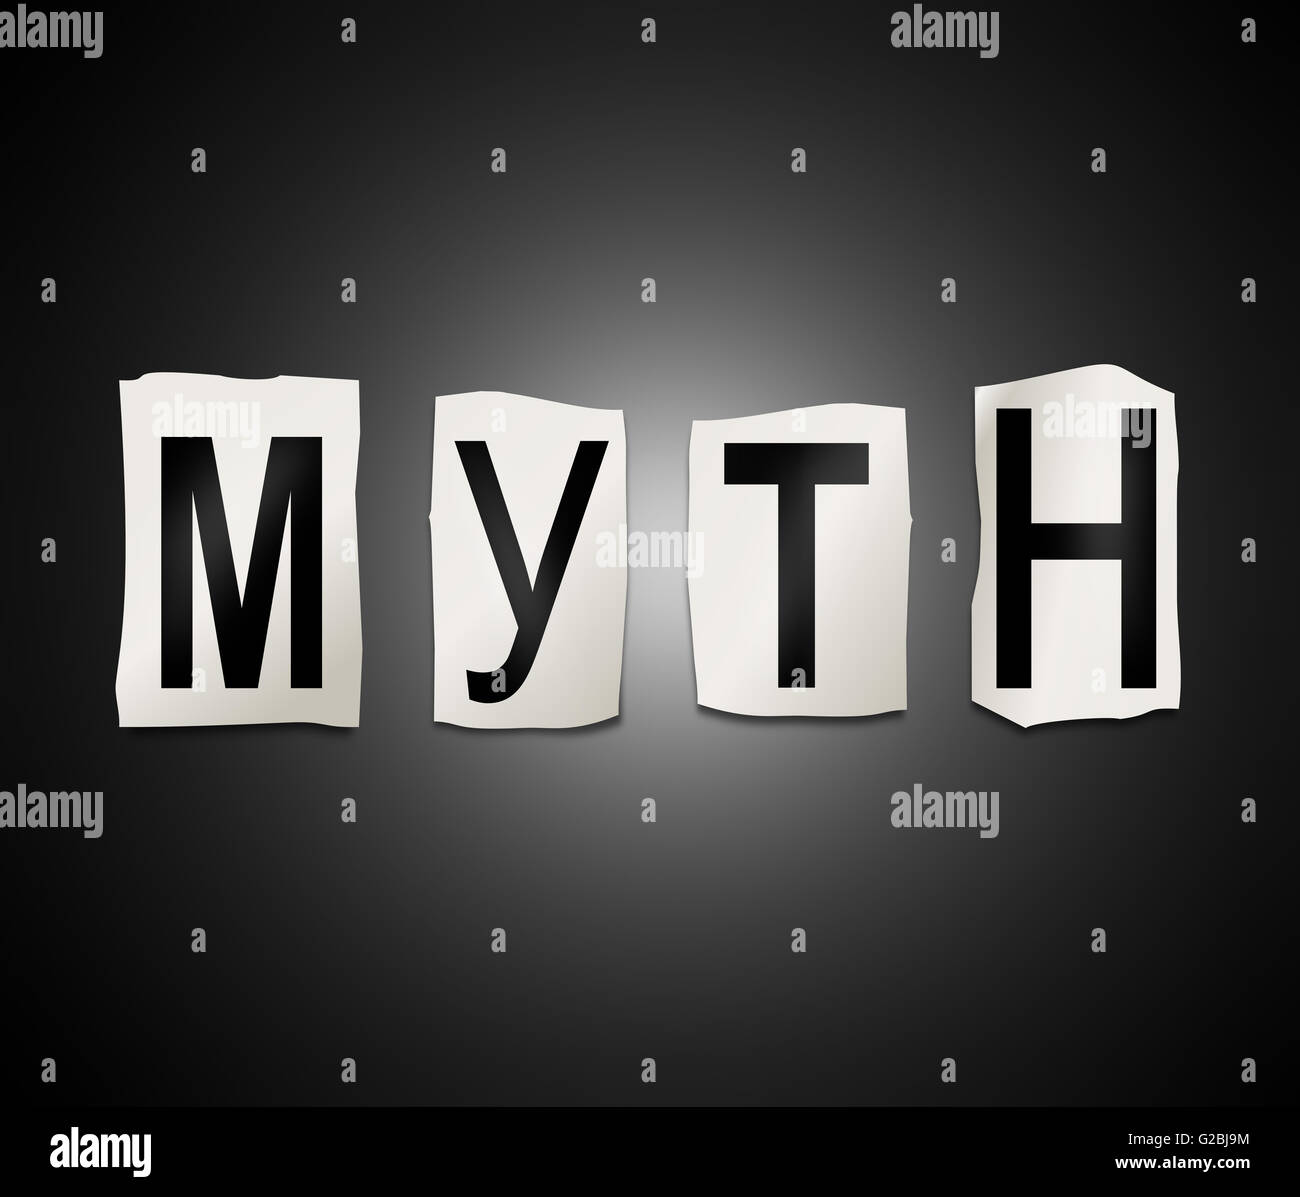 Myth. Stock Photo